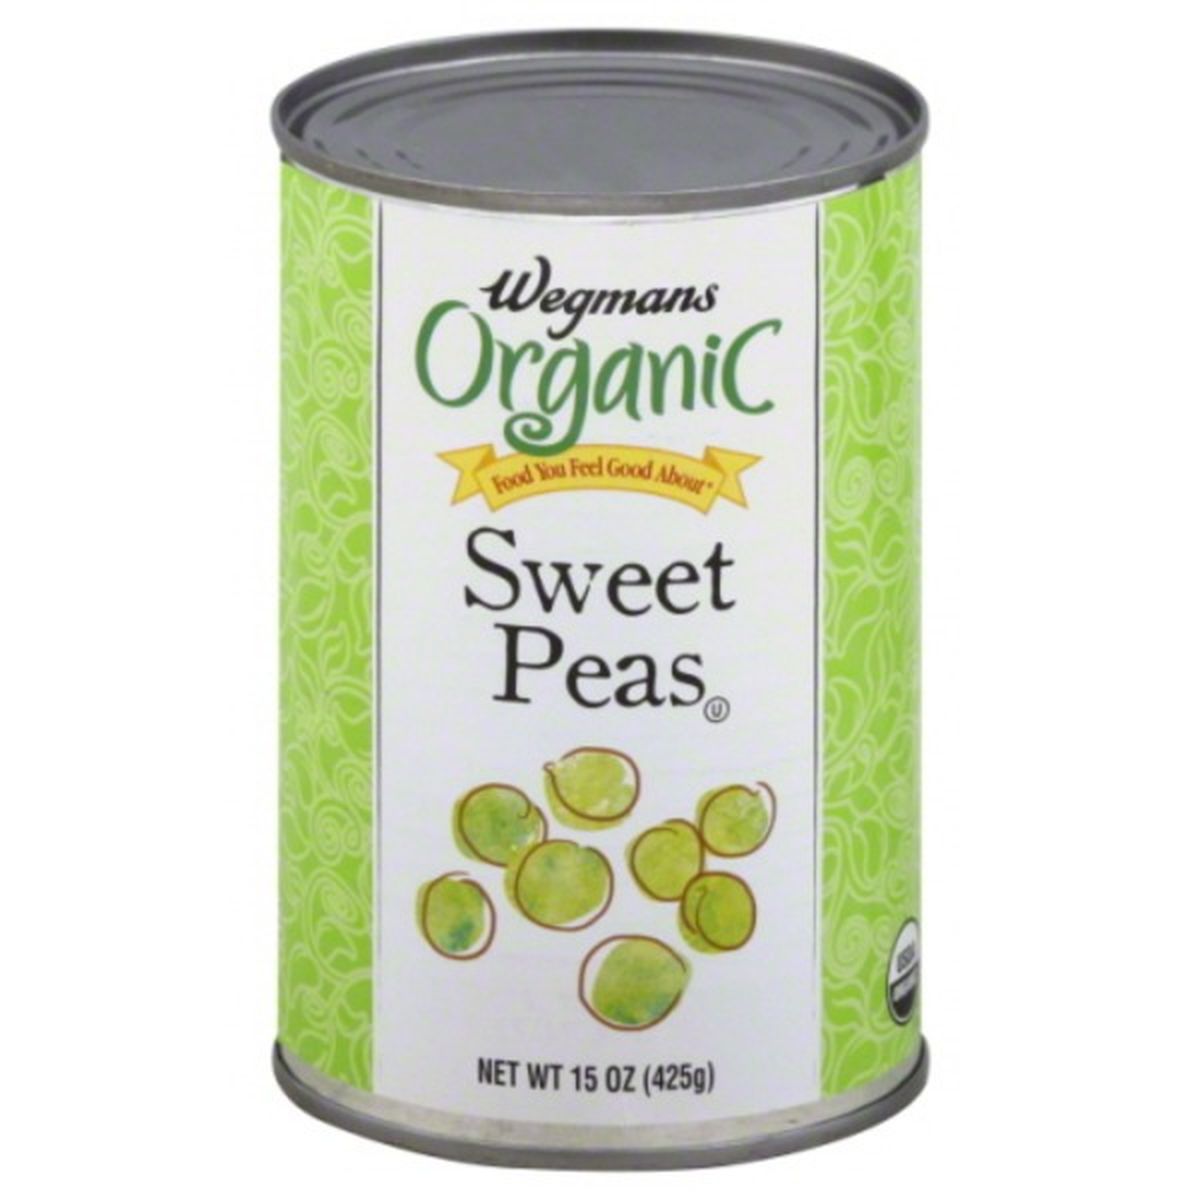 Calories in Wegmans Organic Sweet Peas